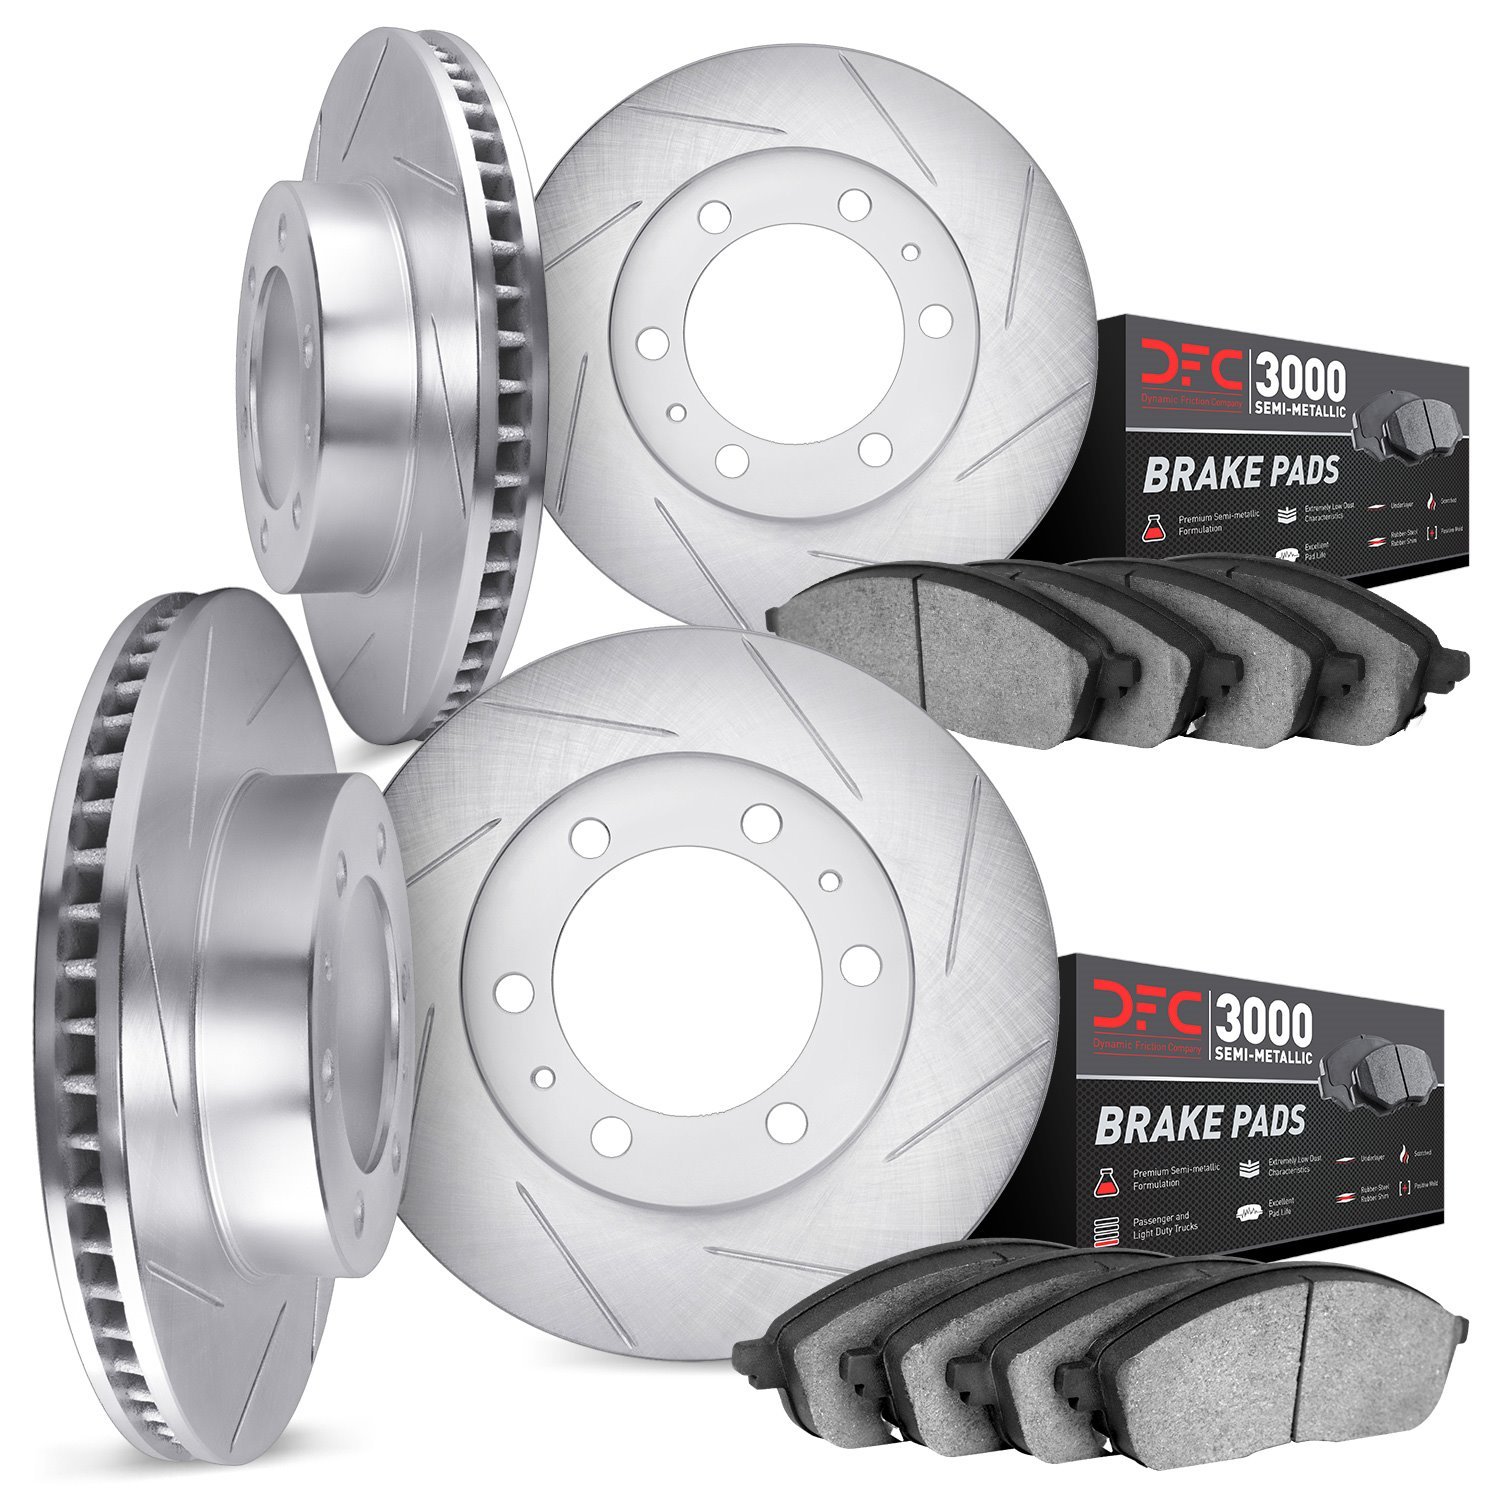 5114-54123 Slotted Brake Rotors with 3000-Series Semi-Metallic Brake Pads Kit & Hardware [Silver], 2018-2021 Ford/Lincoln/Mercur